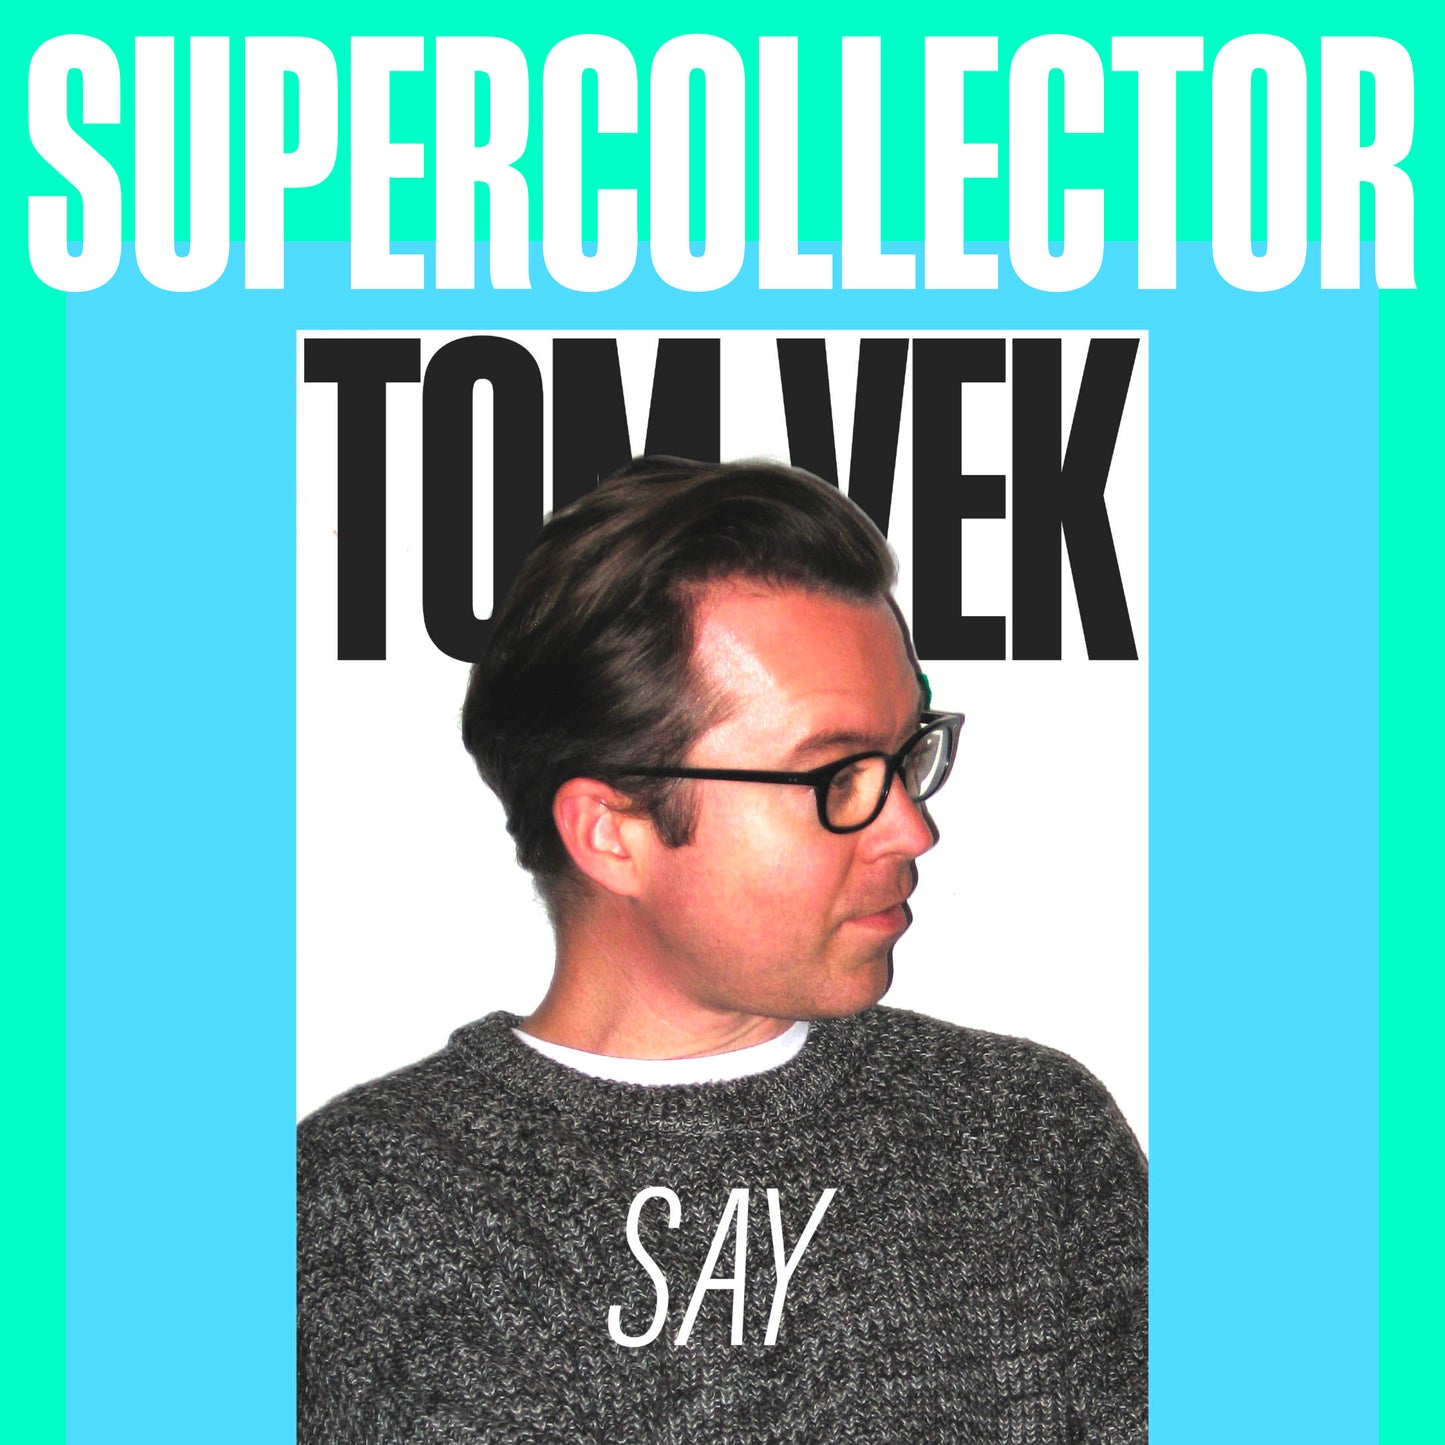 Say SUPERCOLLECTOR single track